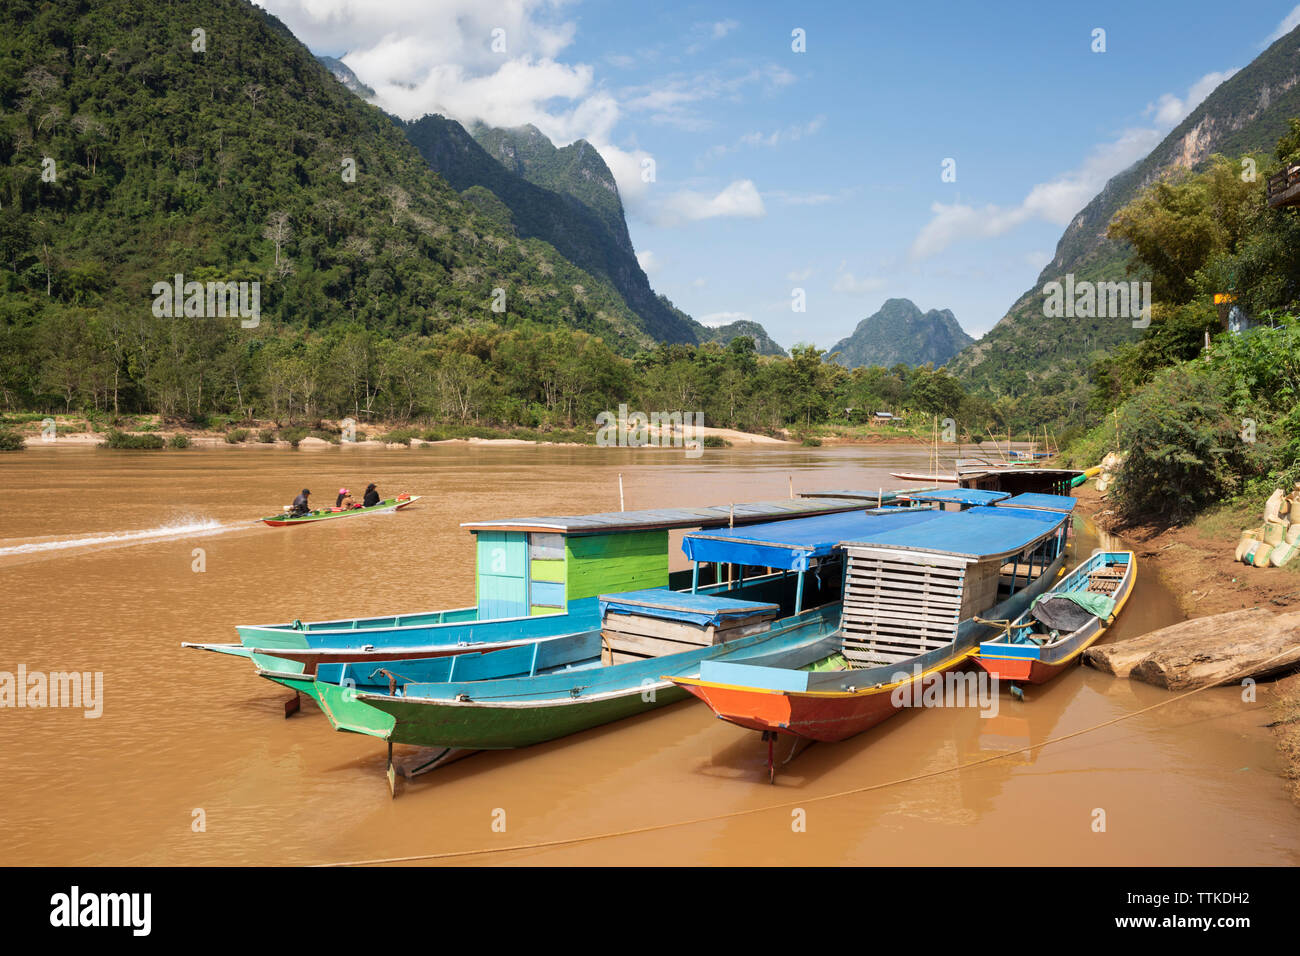 Le barche blu ormeggiate sul fiume Nam ou a Muang Ngoi Neua guardando a nord, Muang Ngoi District, Luang Prabang Province, Laos settentrionale, Laos, Sud-est asiatico Foto Stock